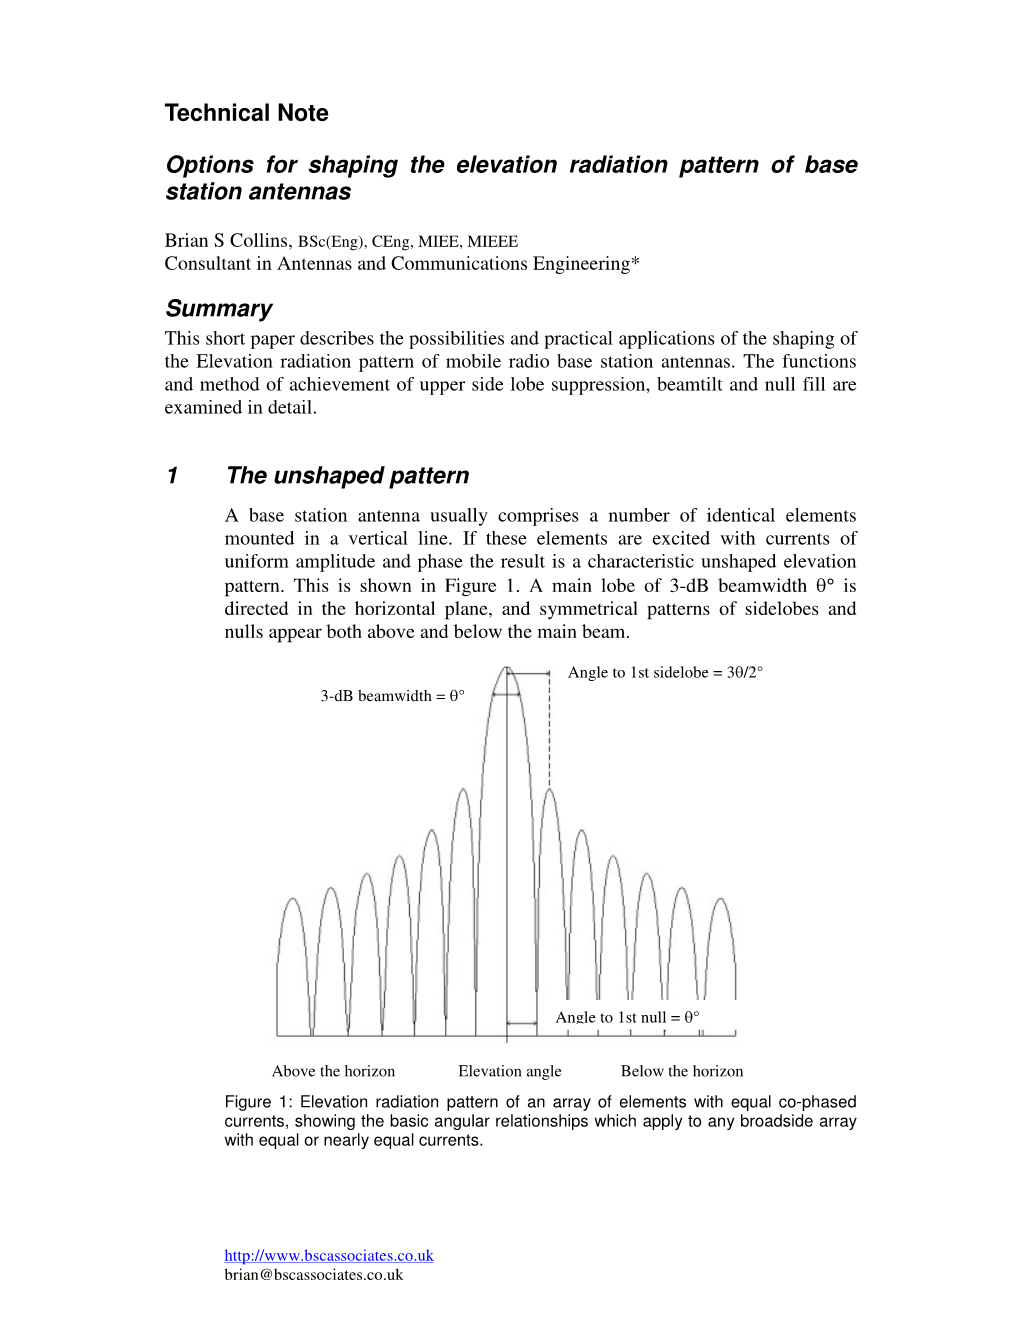 Shaping the Elevation Radiation Pattern of Base Station Antennas